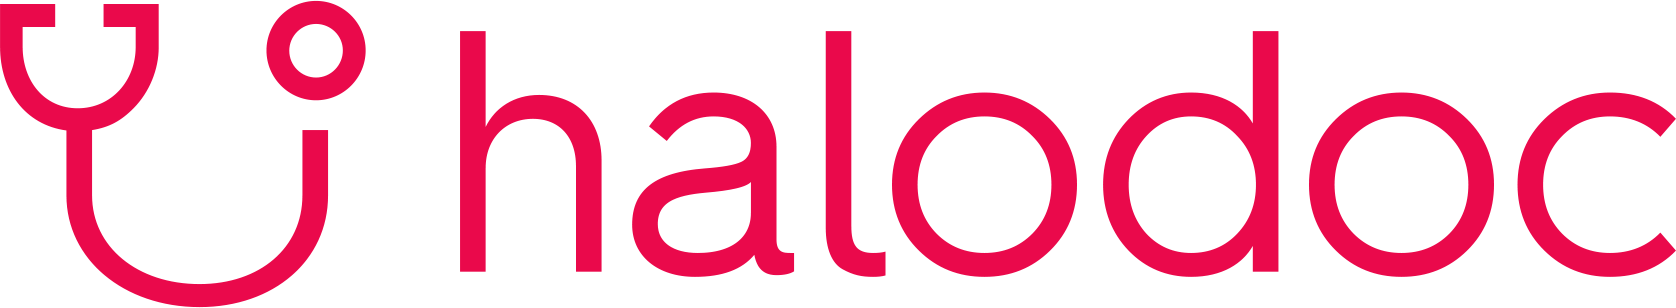 Halodoc logo